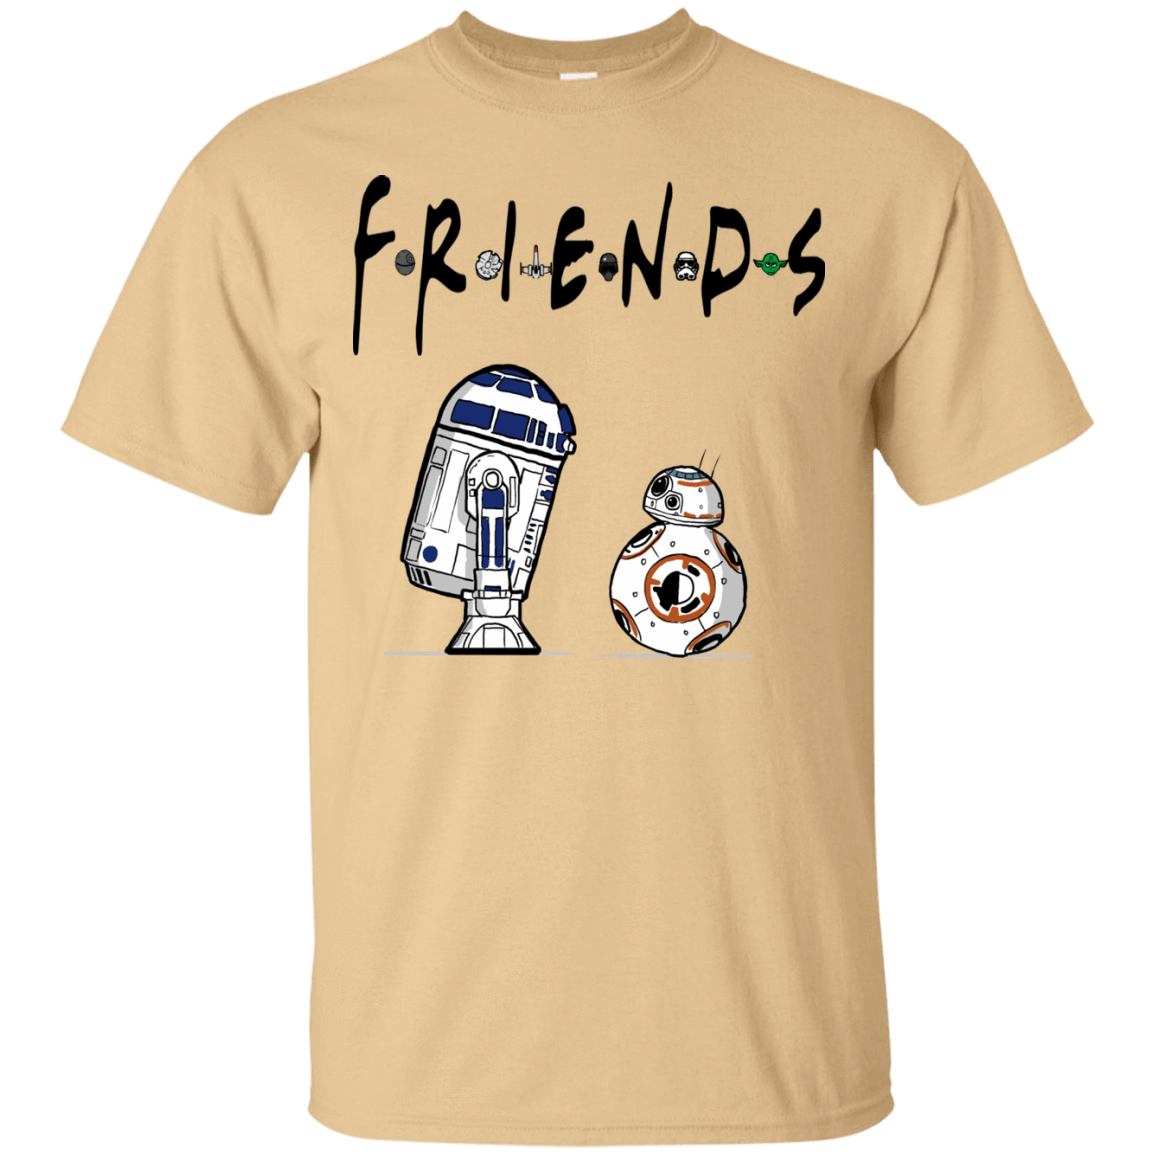 T-Shirts Vegas Gold / Small Droid Friends T-Shirt